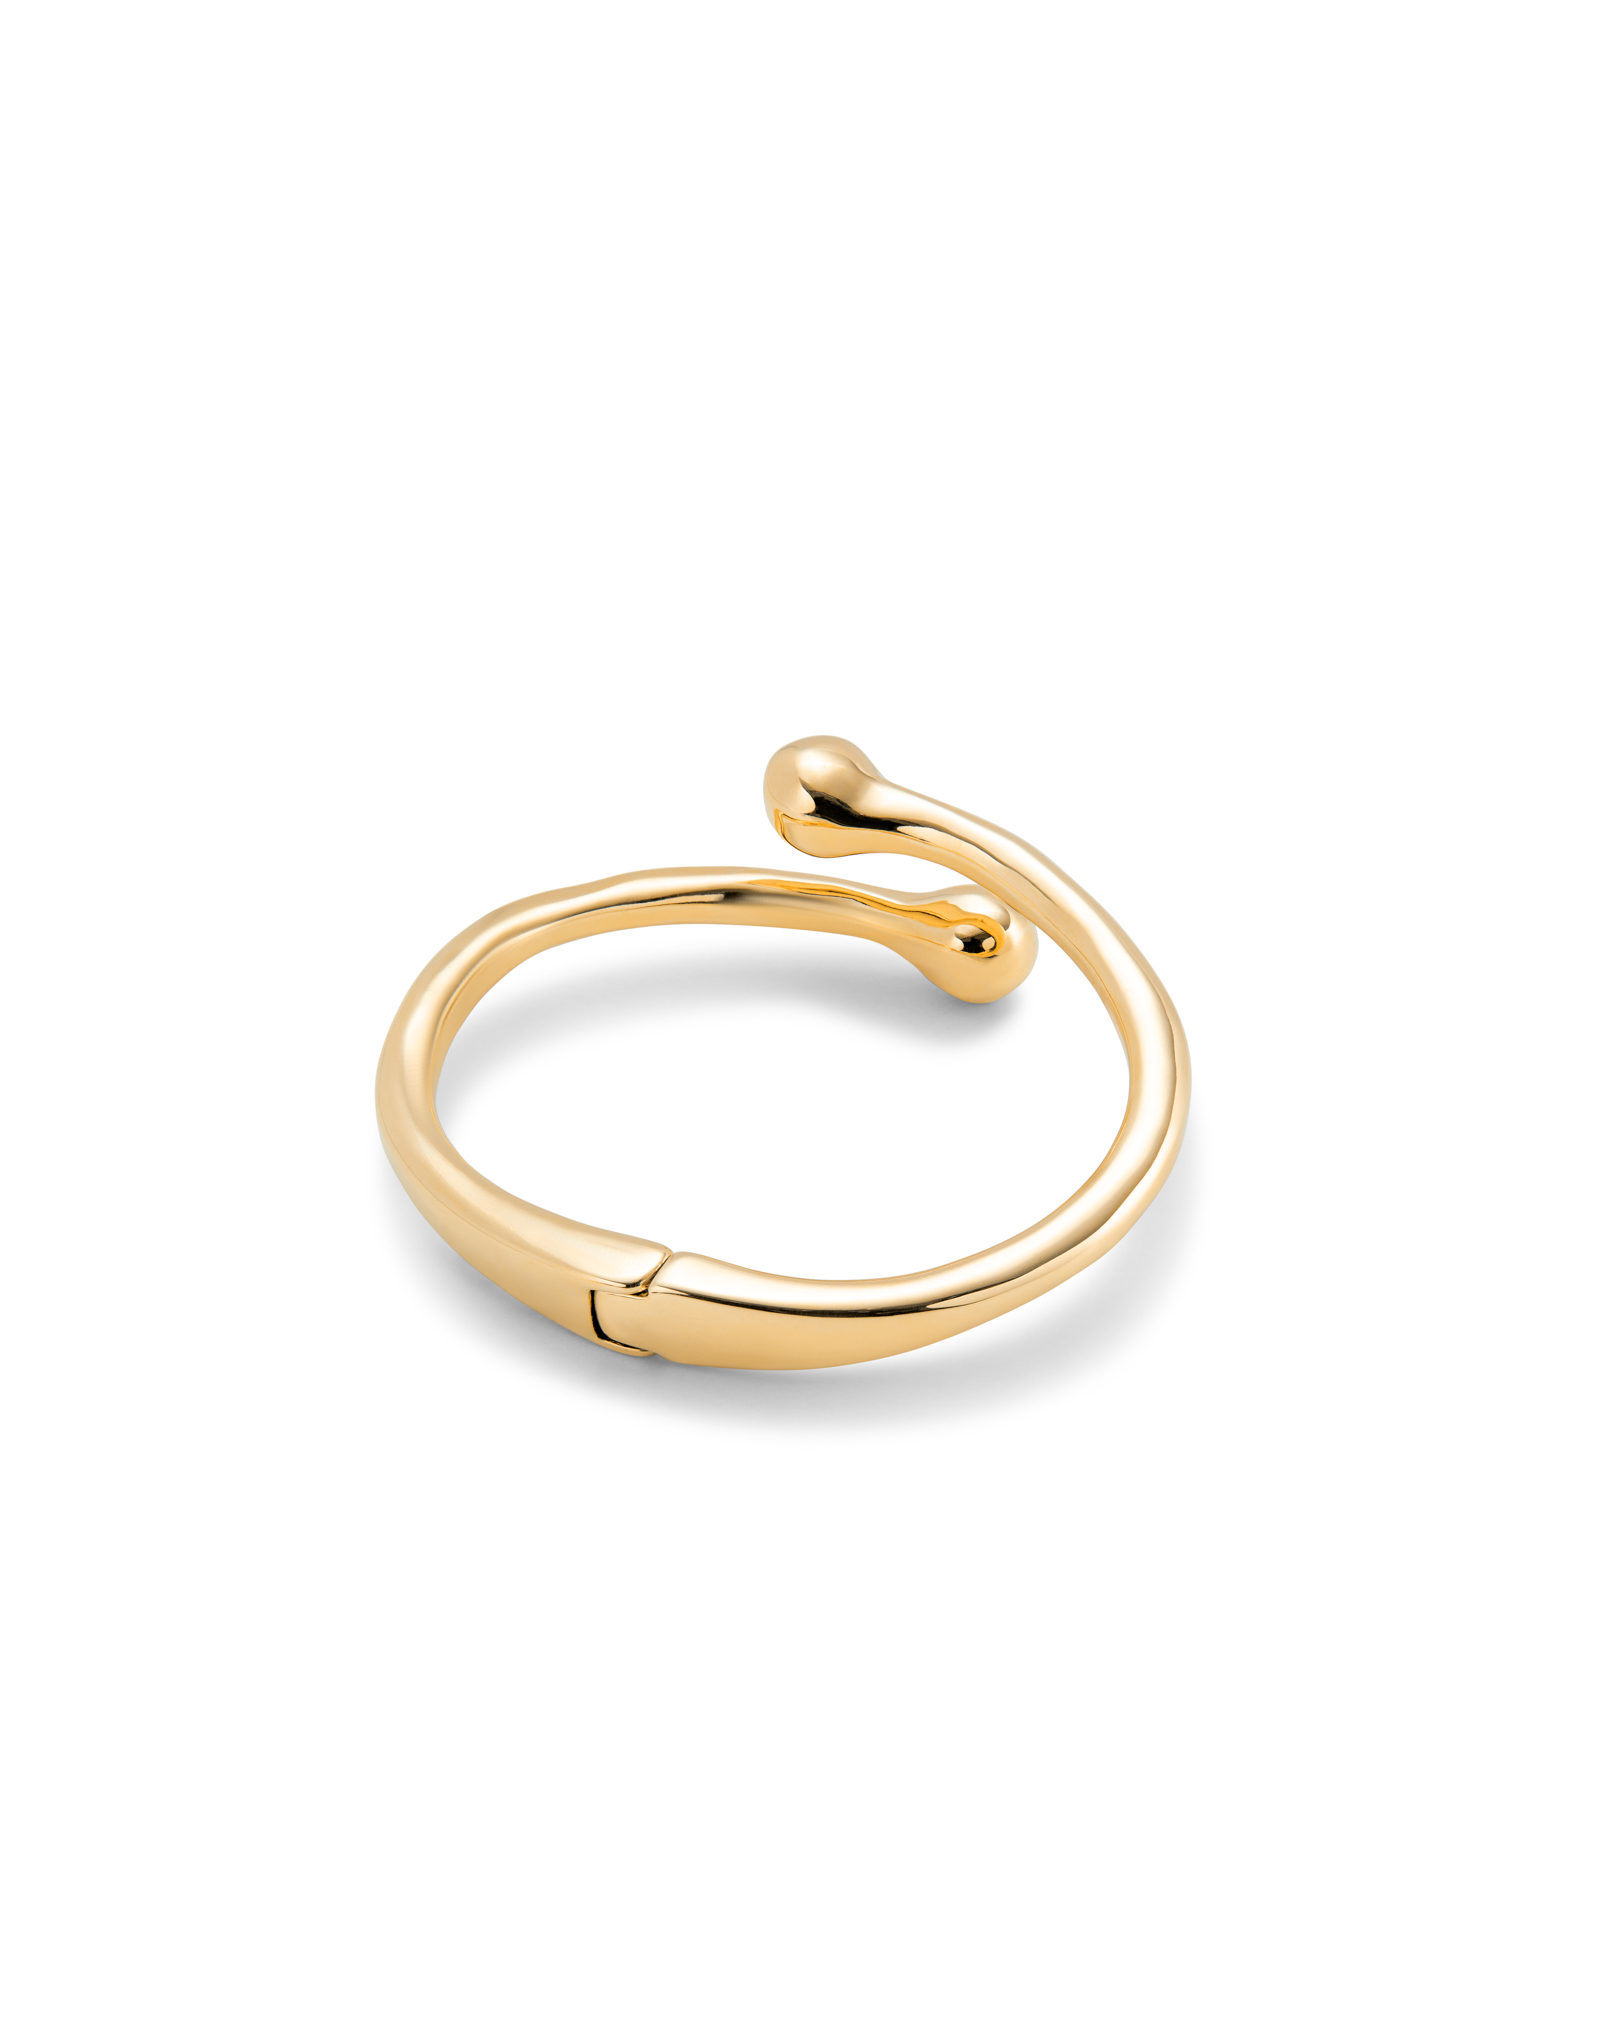 18K gold-plated bracelet with inner spring, Golden, large image number null